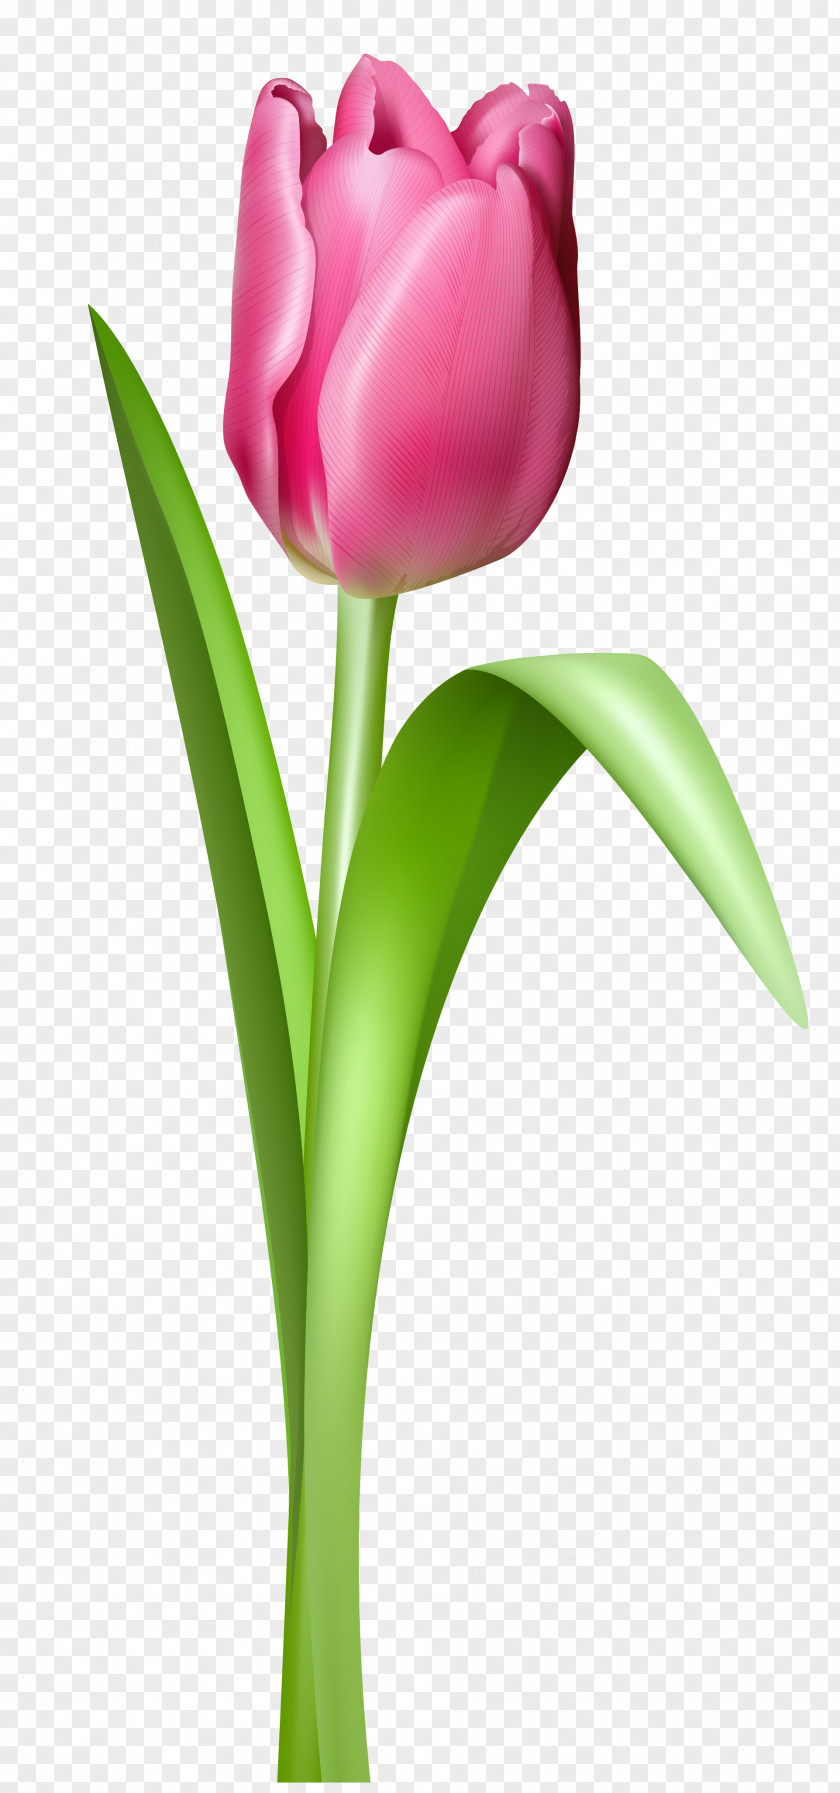 Tulip Free Download Flower Clip Art PNG